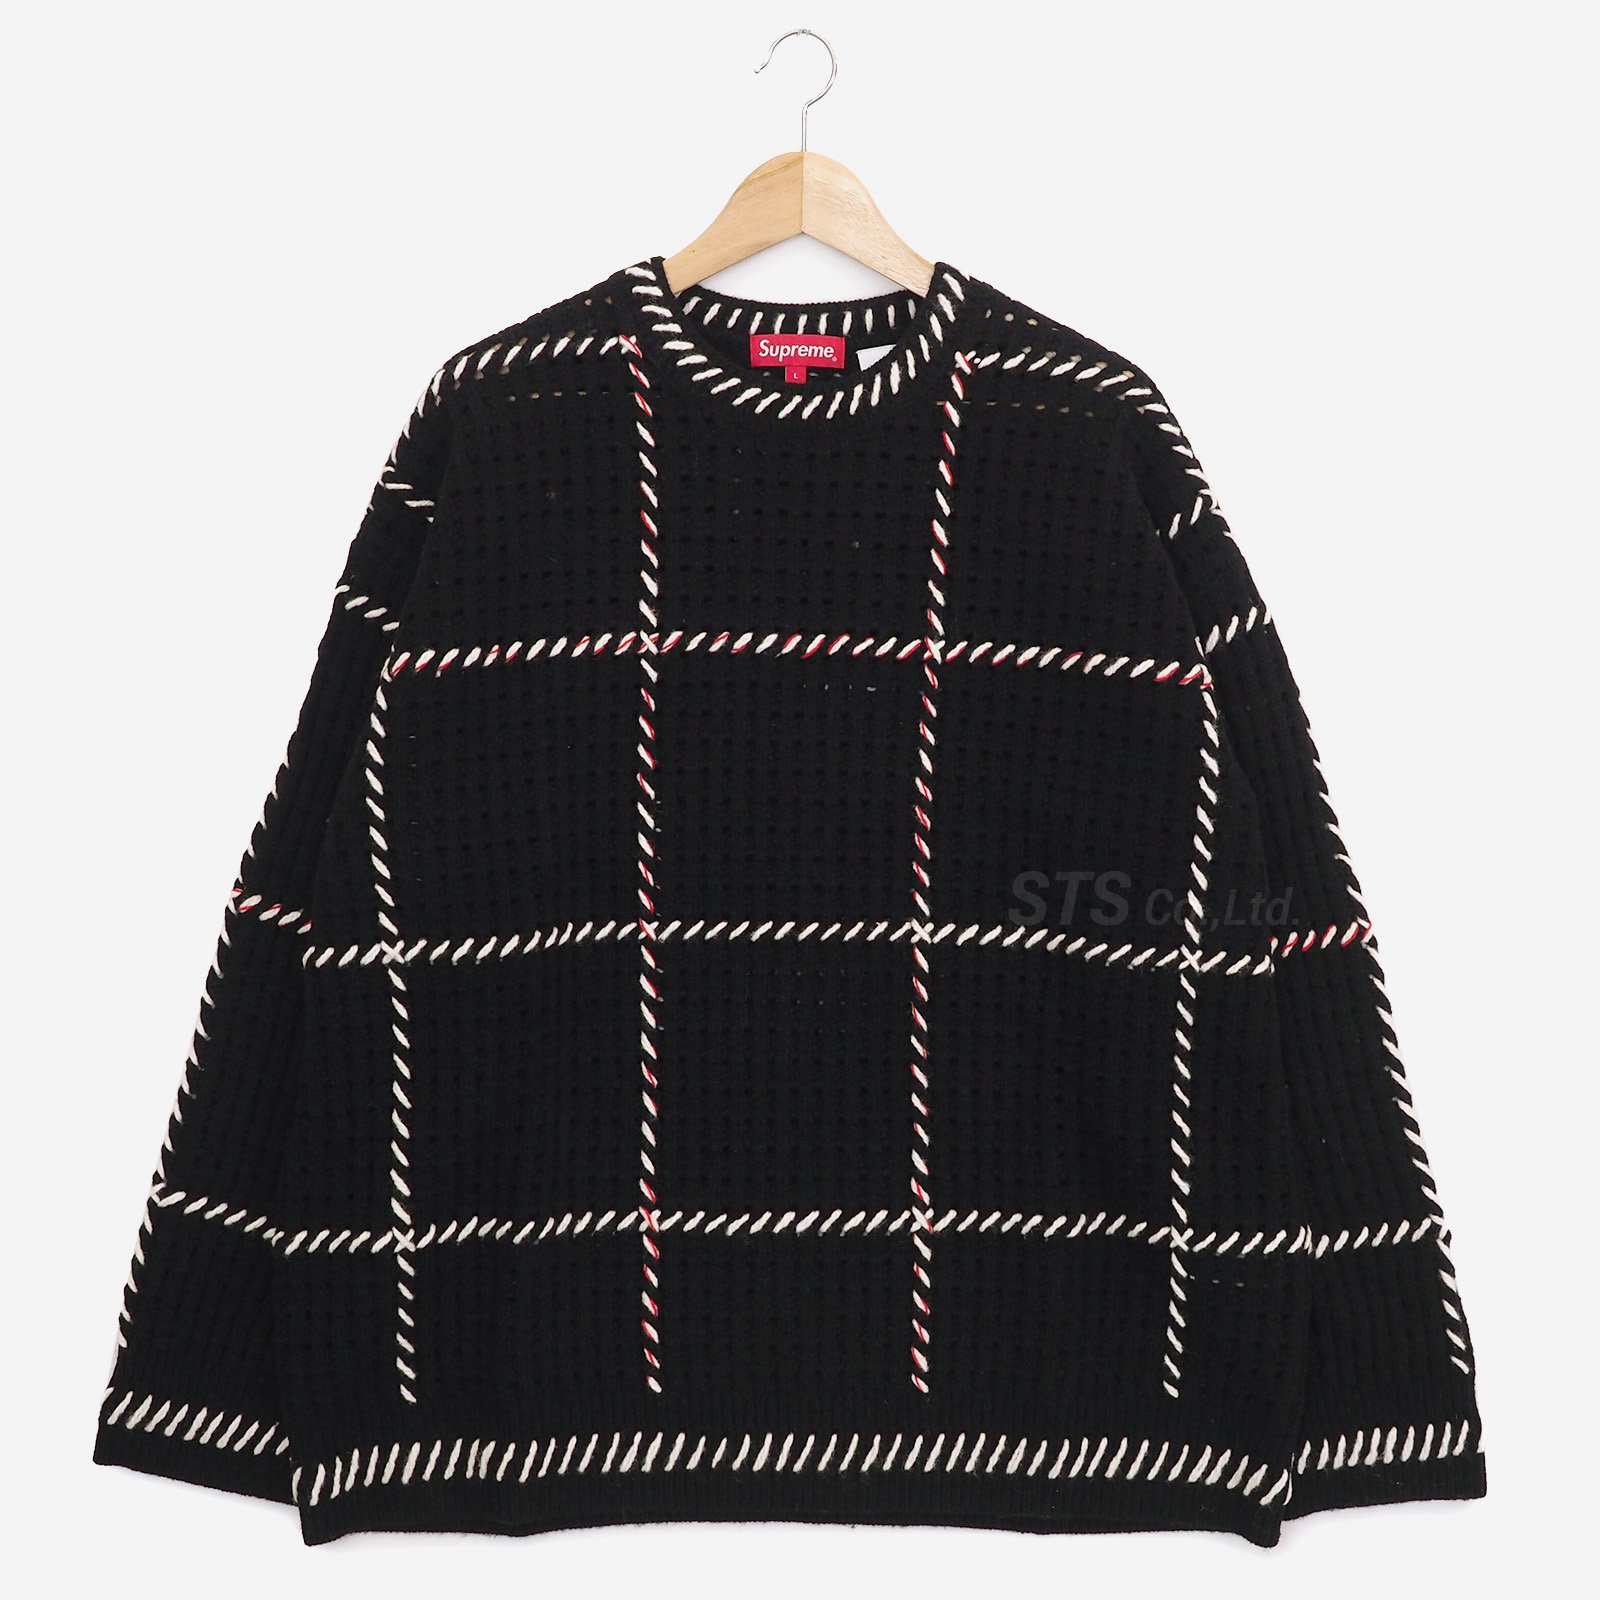 Supreme シュプリーム / Quilt Stitch Sweater